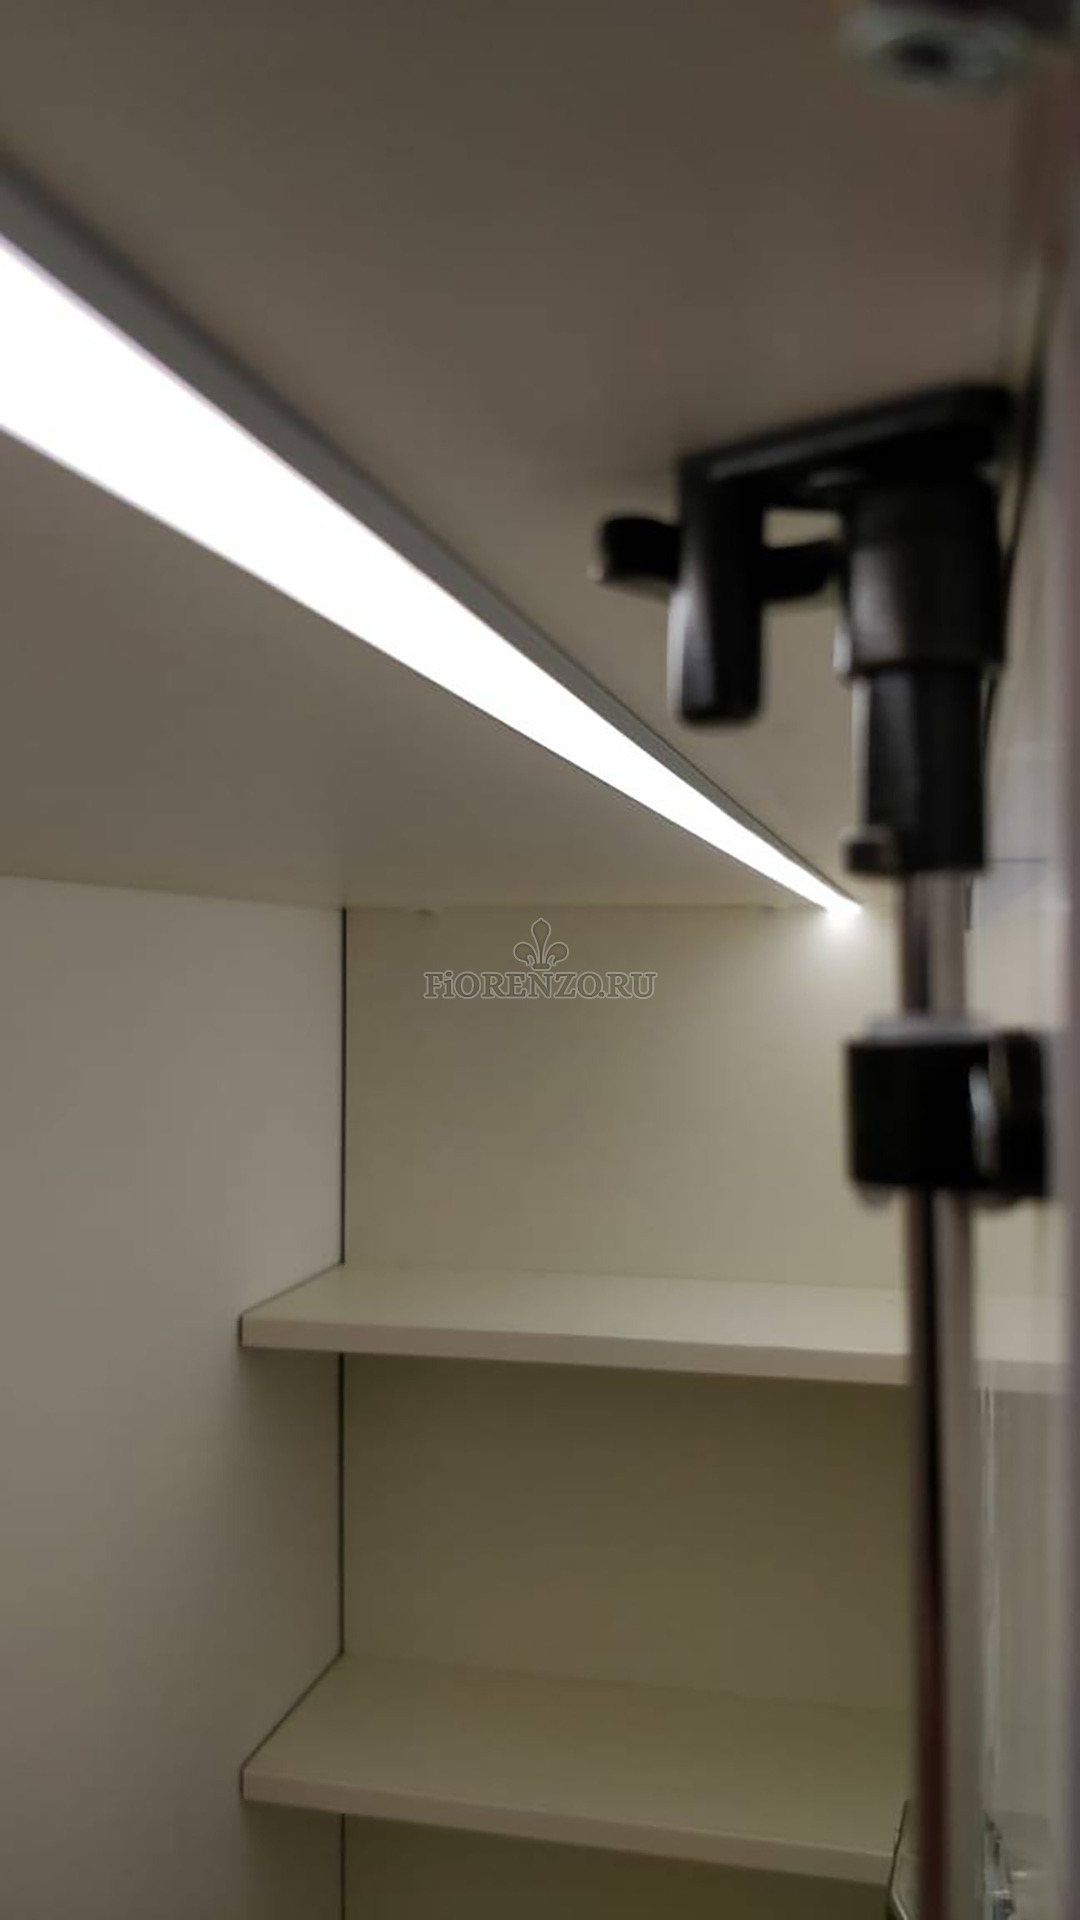 Подсветка внутри шкафа светодиоды